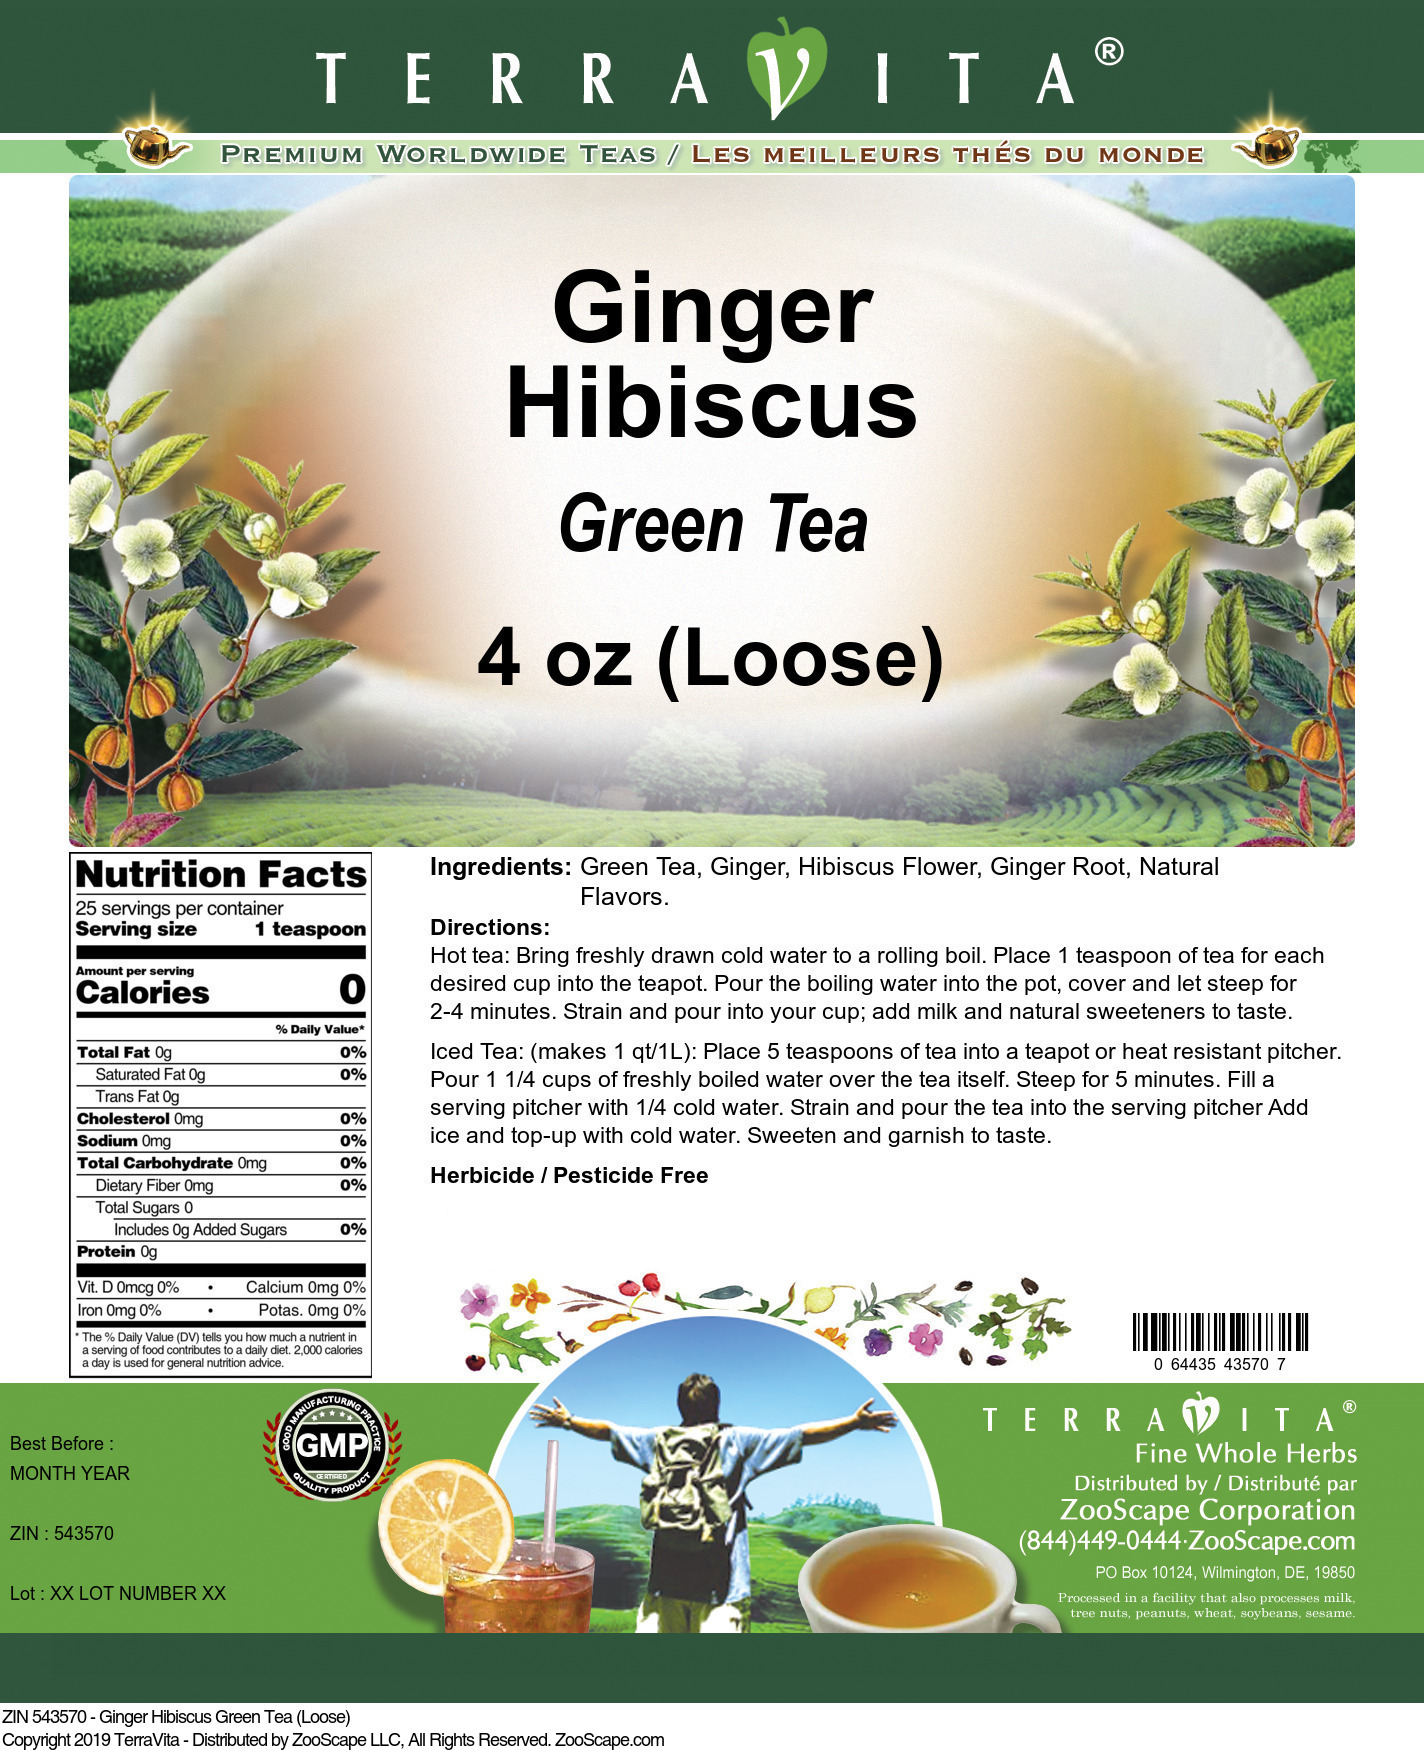 Ginger Hibiscus Green Tea (Loose) - Label